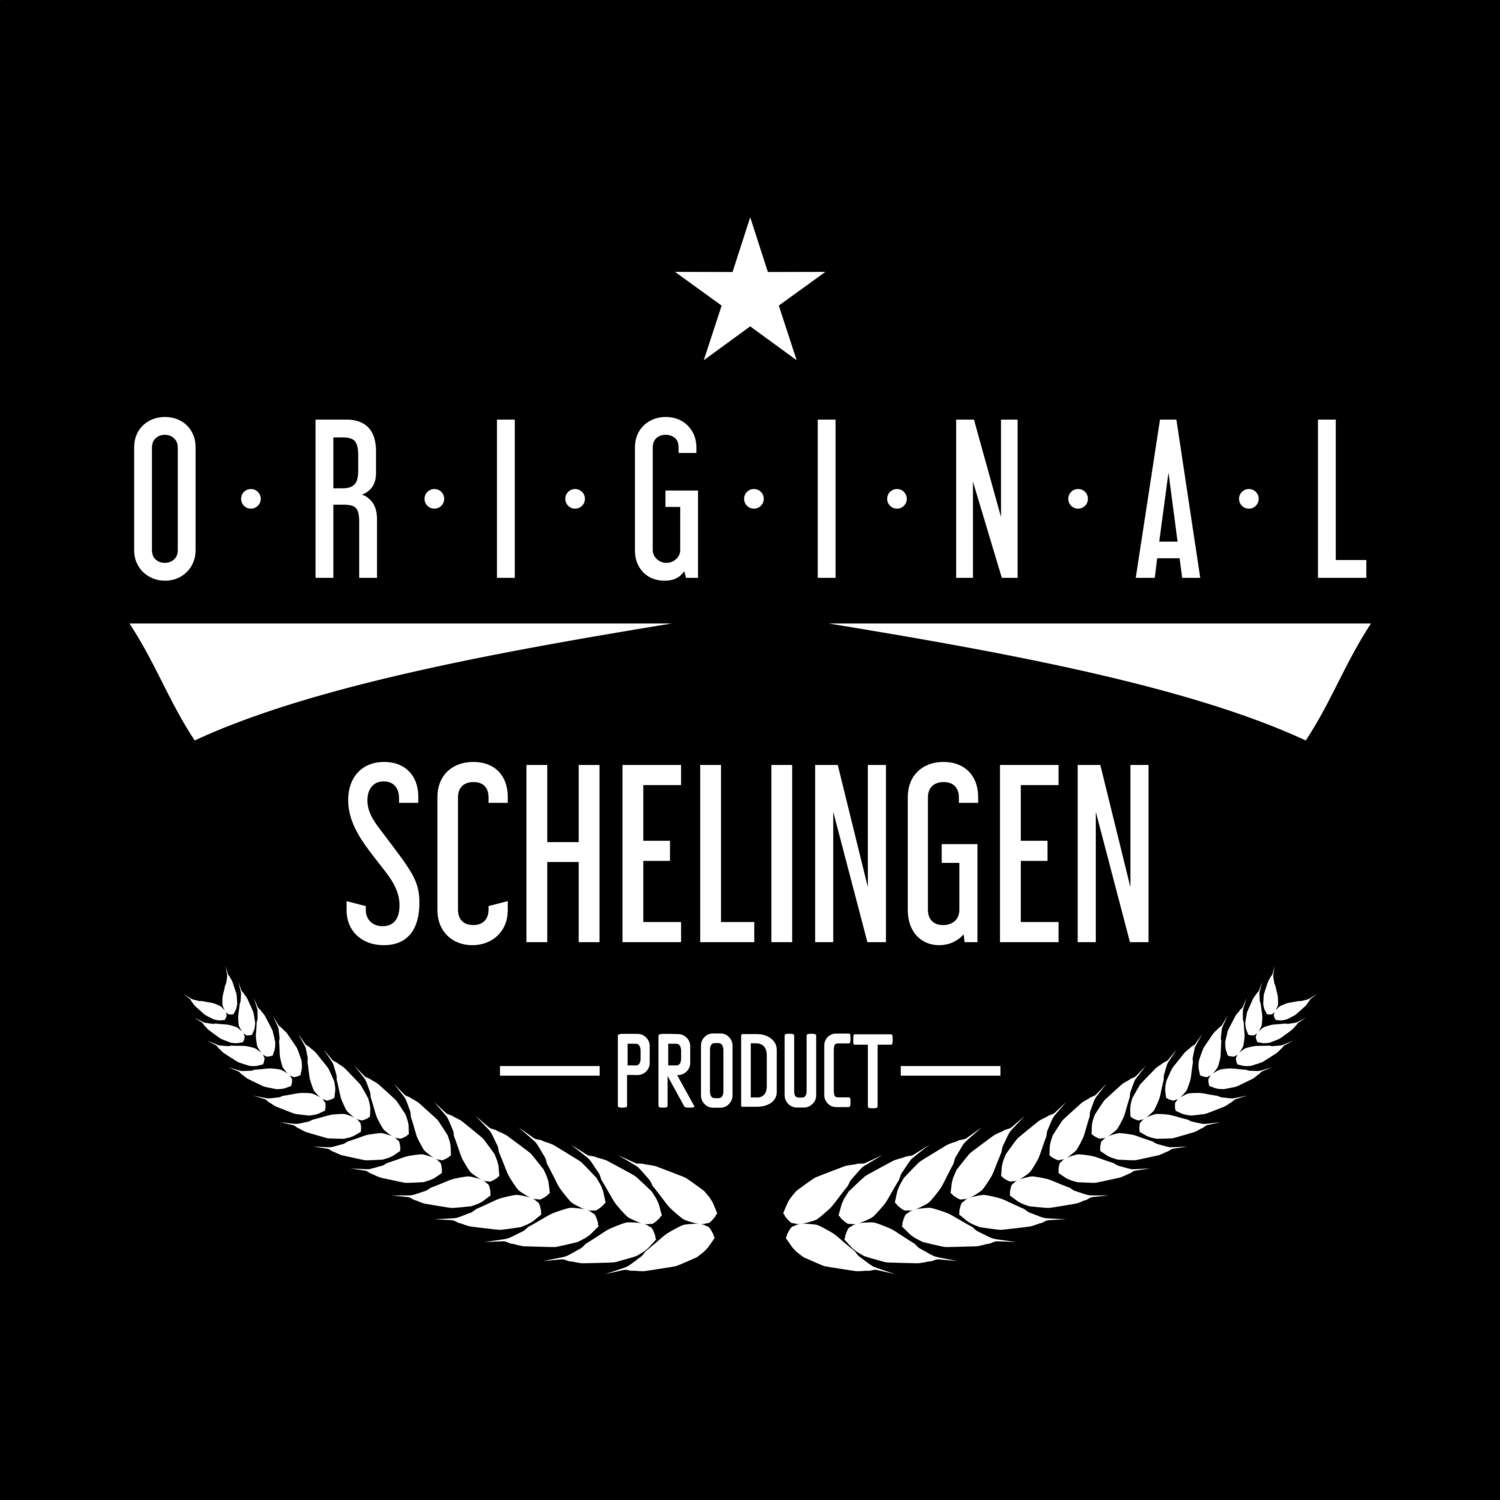 Schelingen T-Shirt »Original Product«